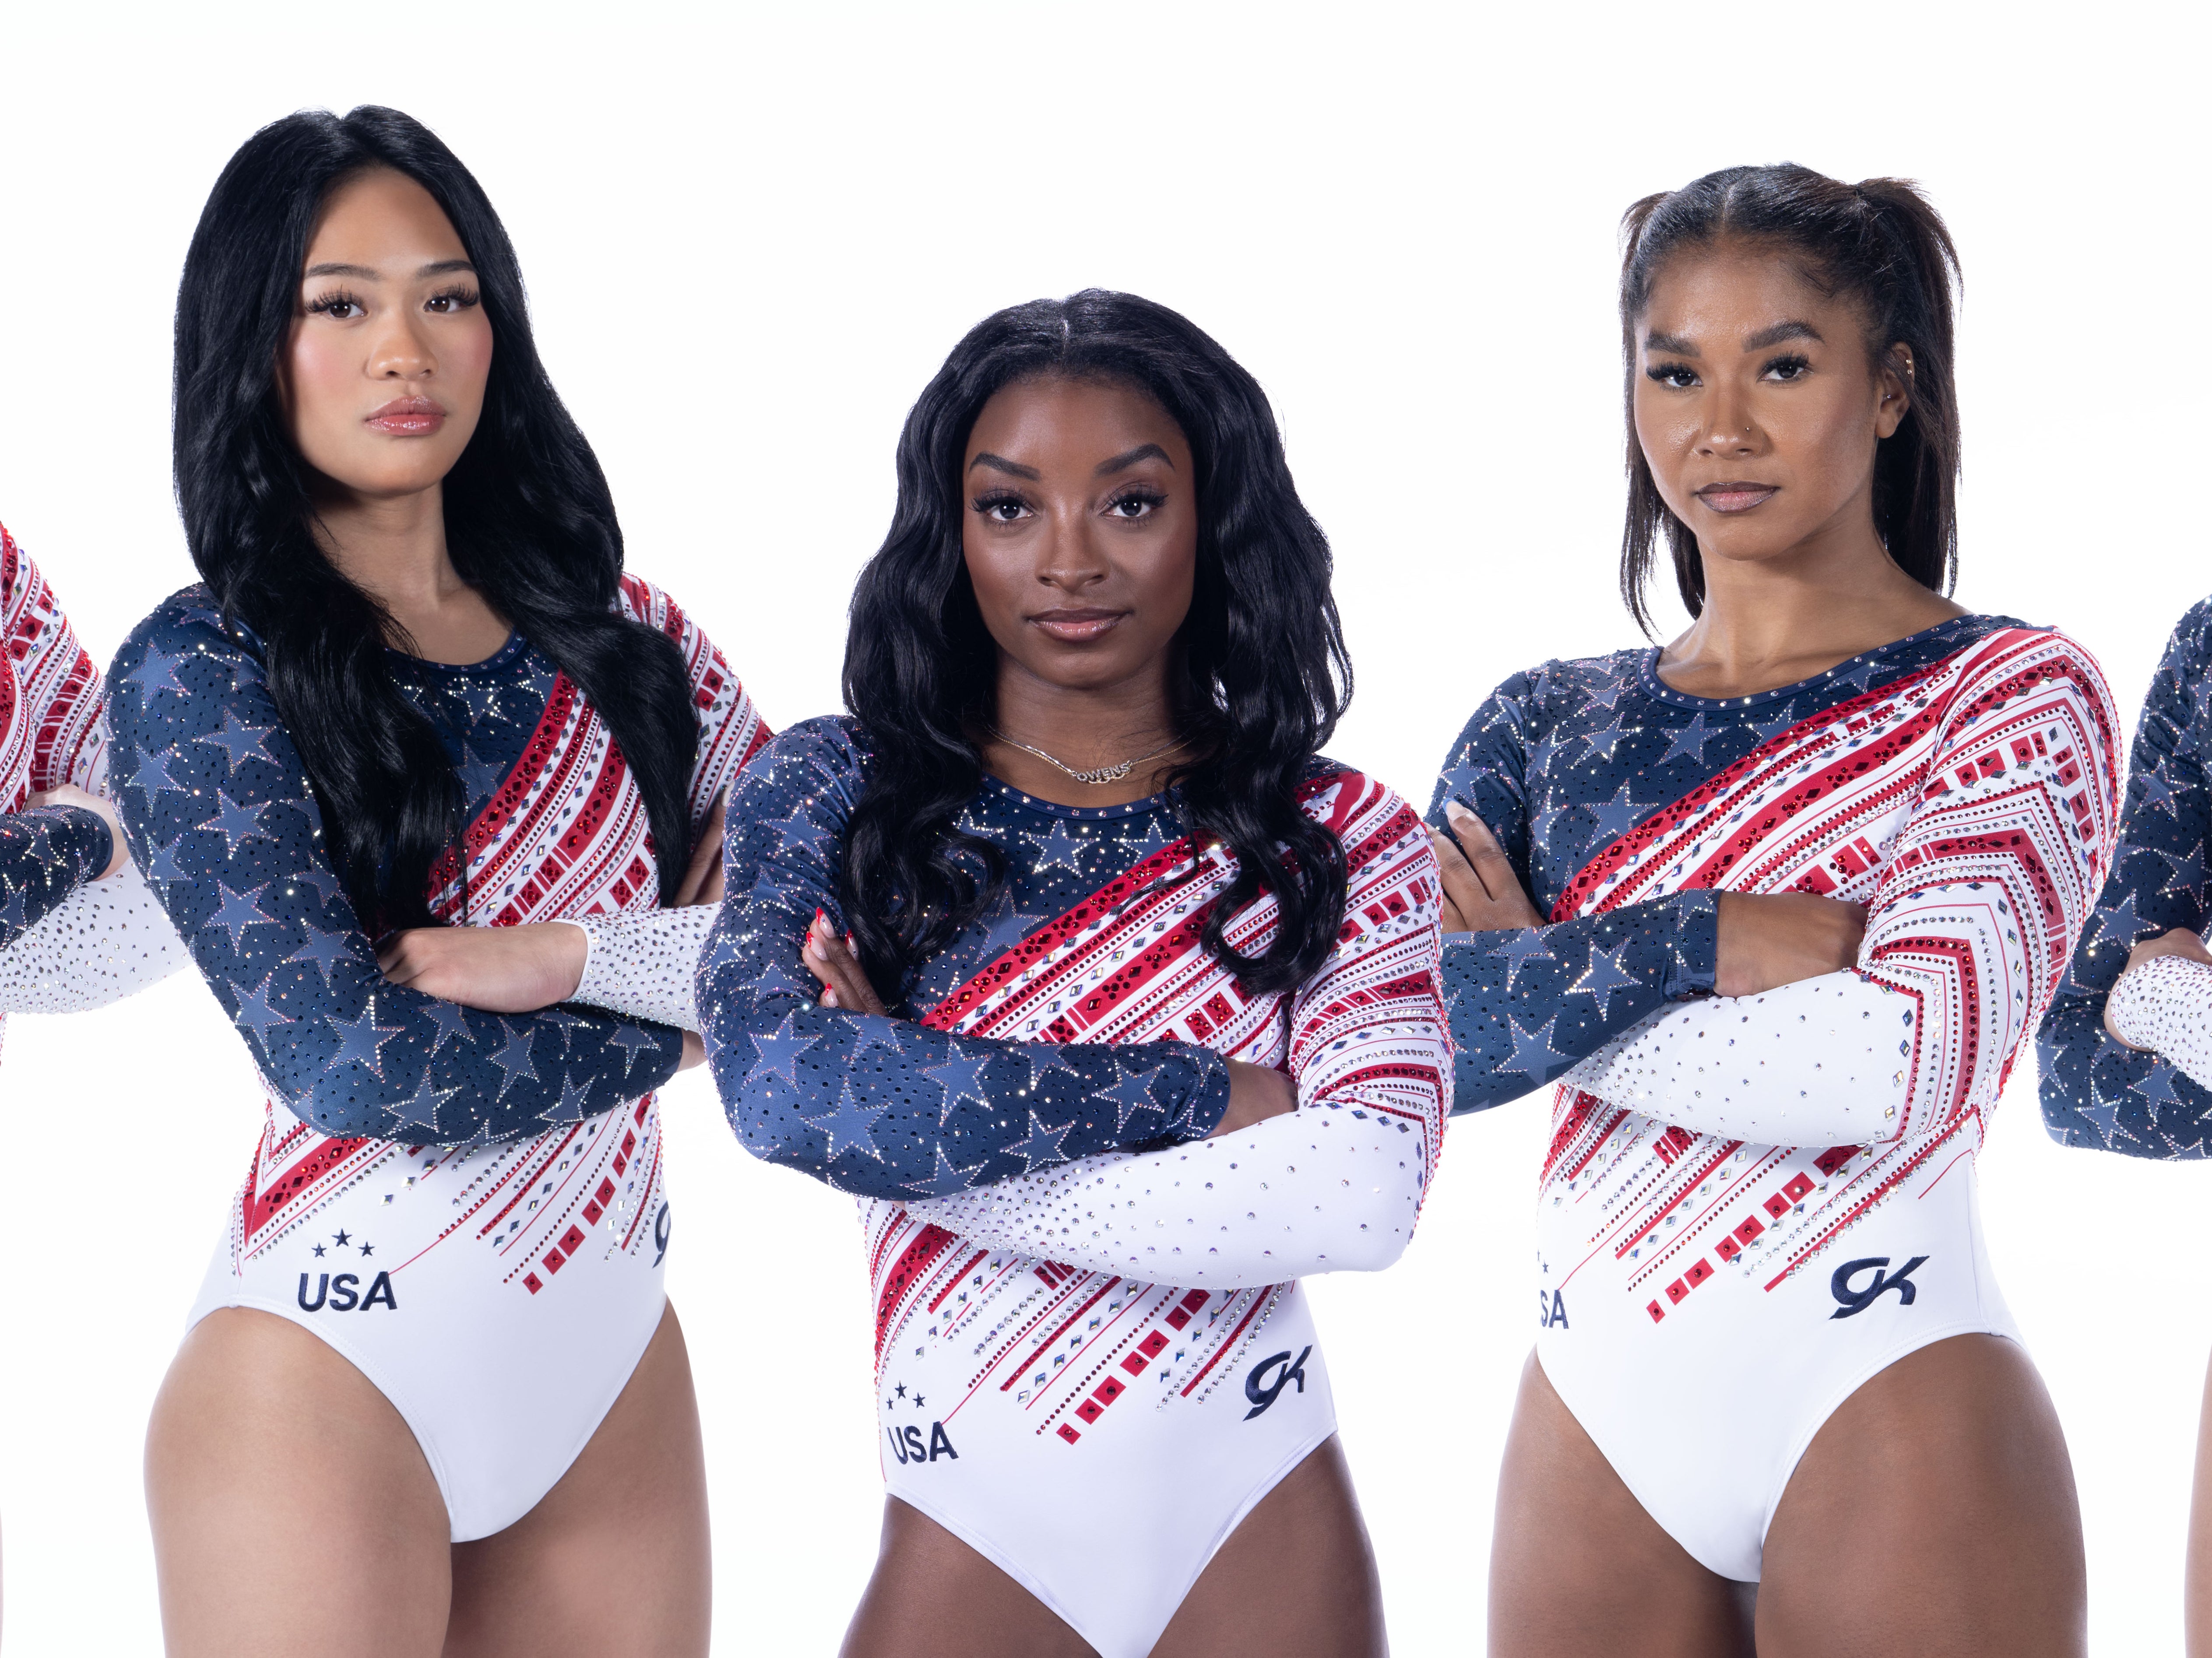 Team USA’s gymnastics uniforms unveiled ahead of the 2024 Paris Olympics